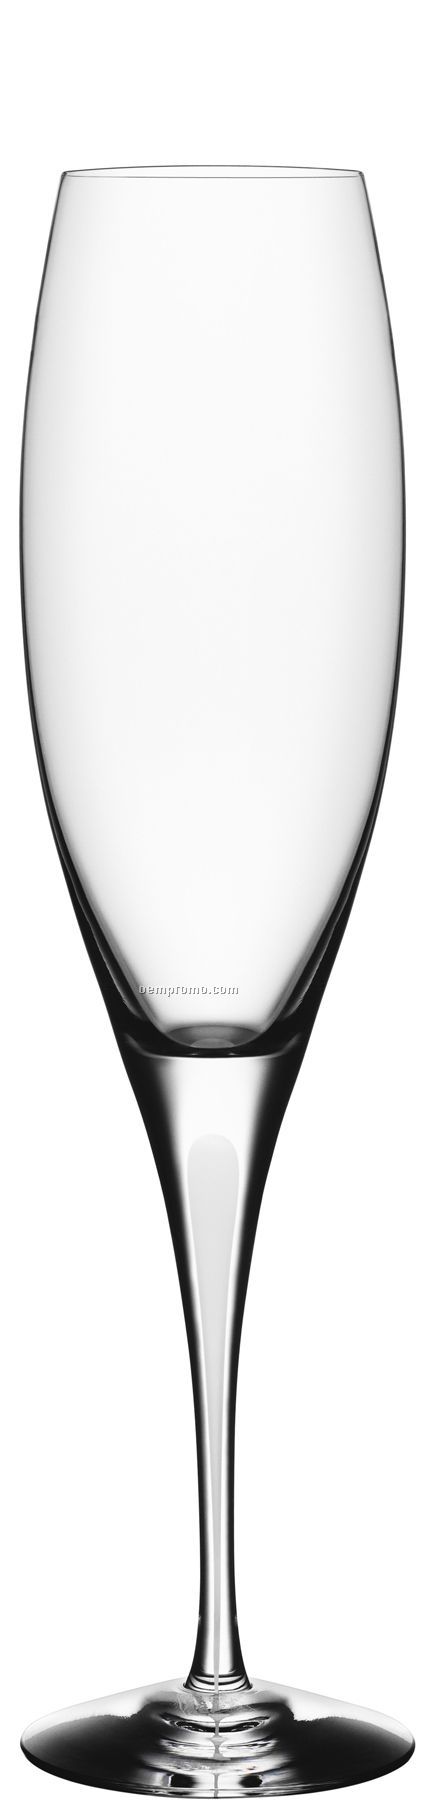 Intermezzo Crystal Satin Champagne Flute Glass W/ White Drop,China ...